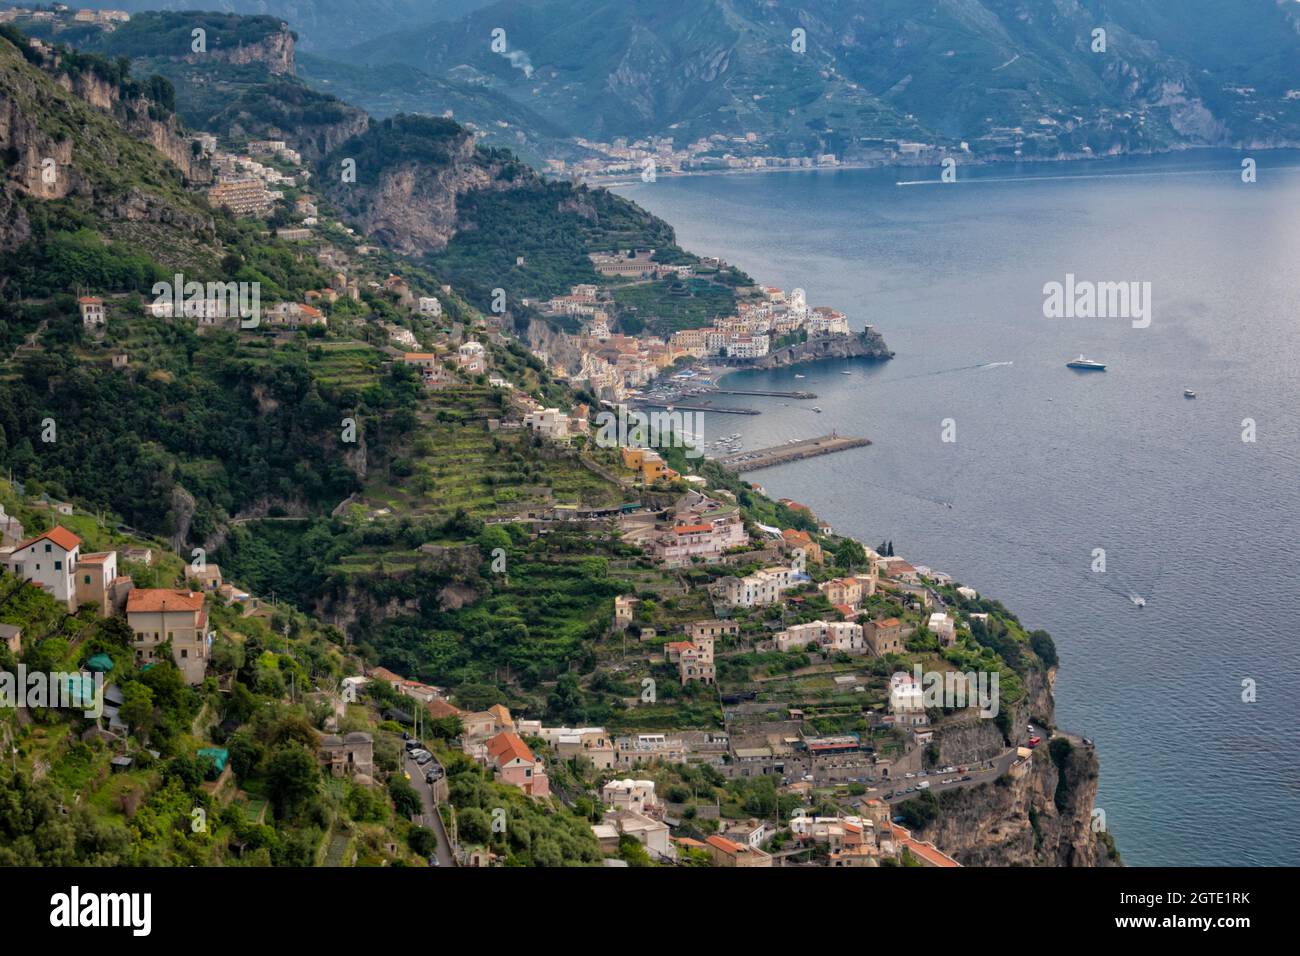 Looking down on the town of Amalfi on the Amalfi Coast, Campania, Italy Stock Photo